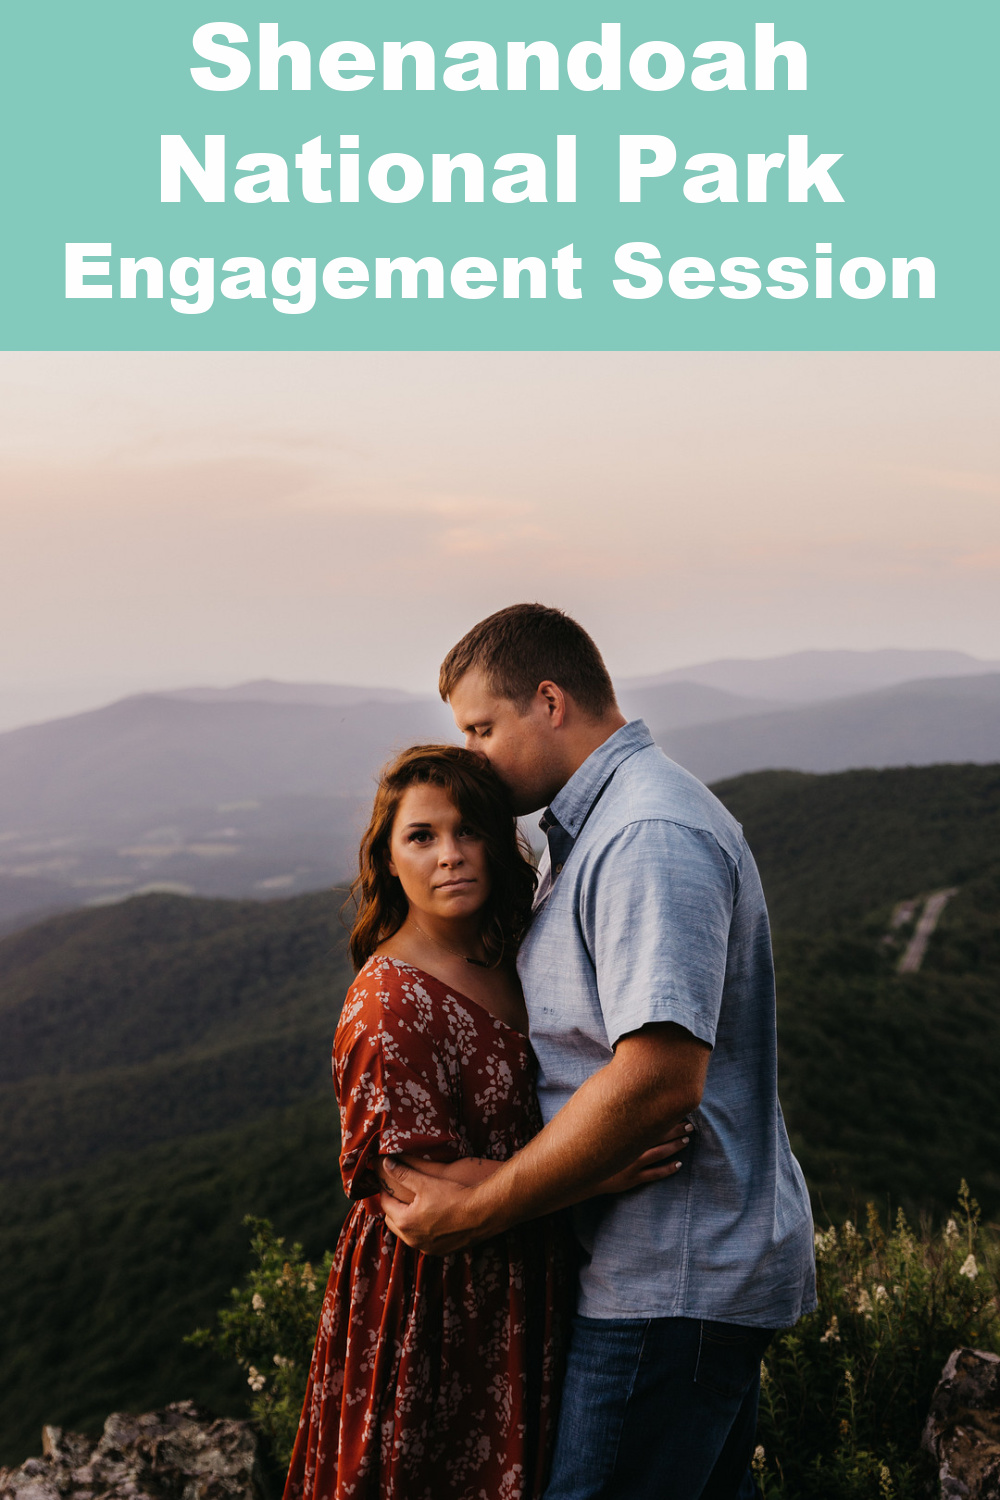 Destination Elopement and Engagement Ideas - Rustic Wedding Inspiration